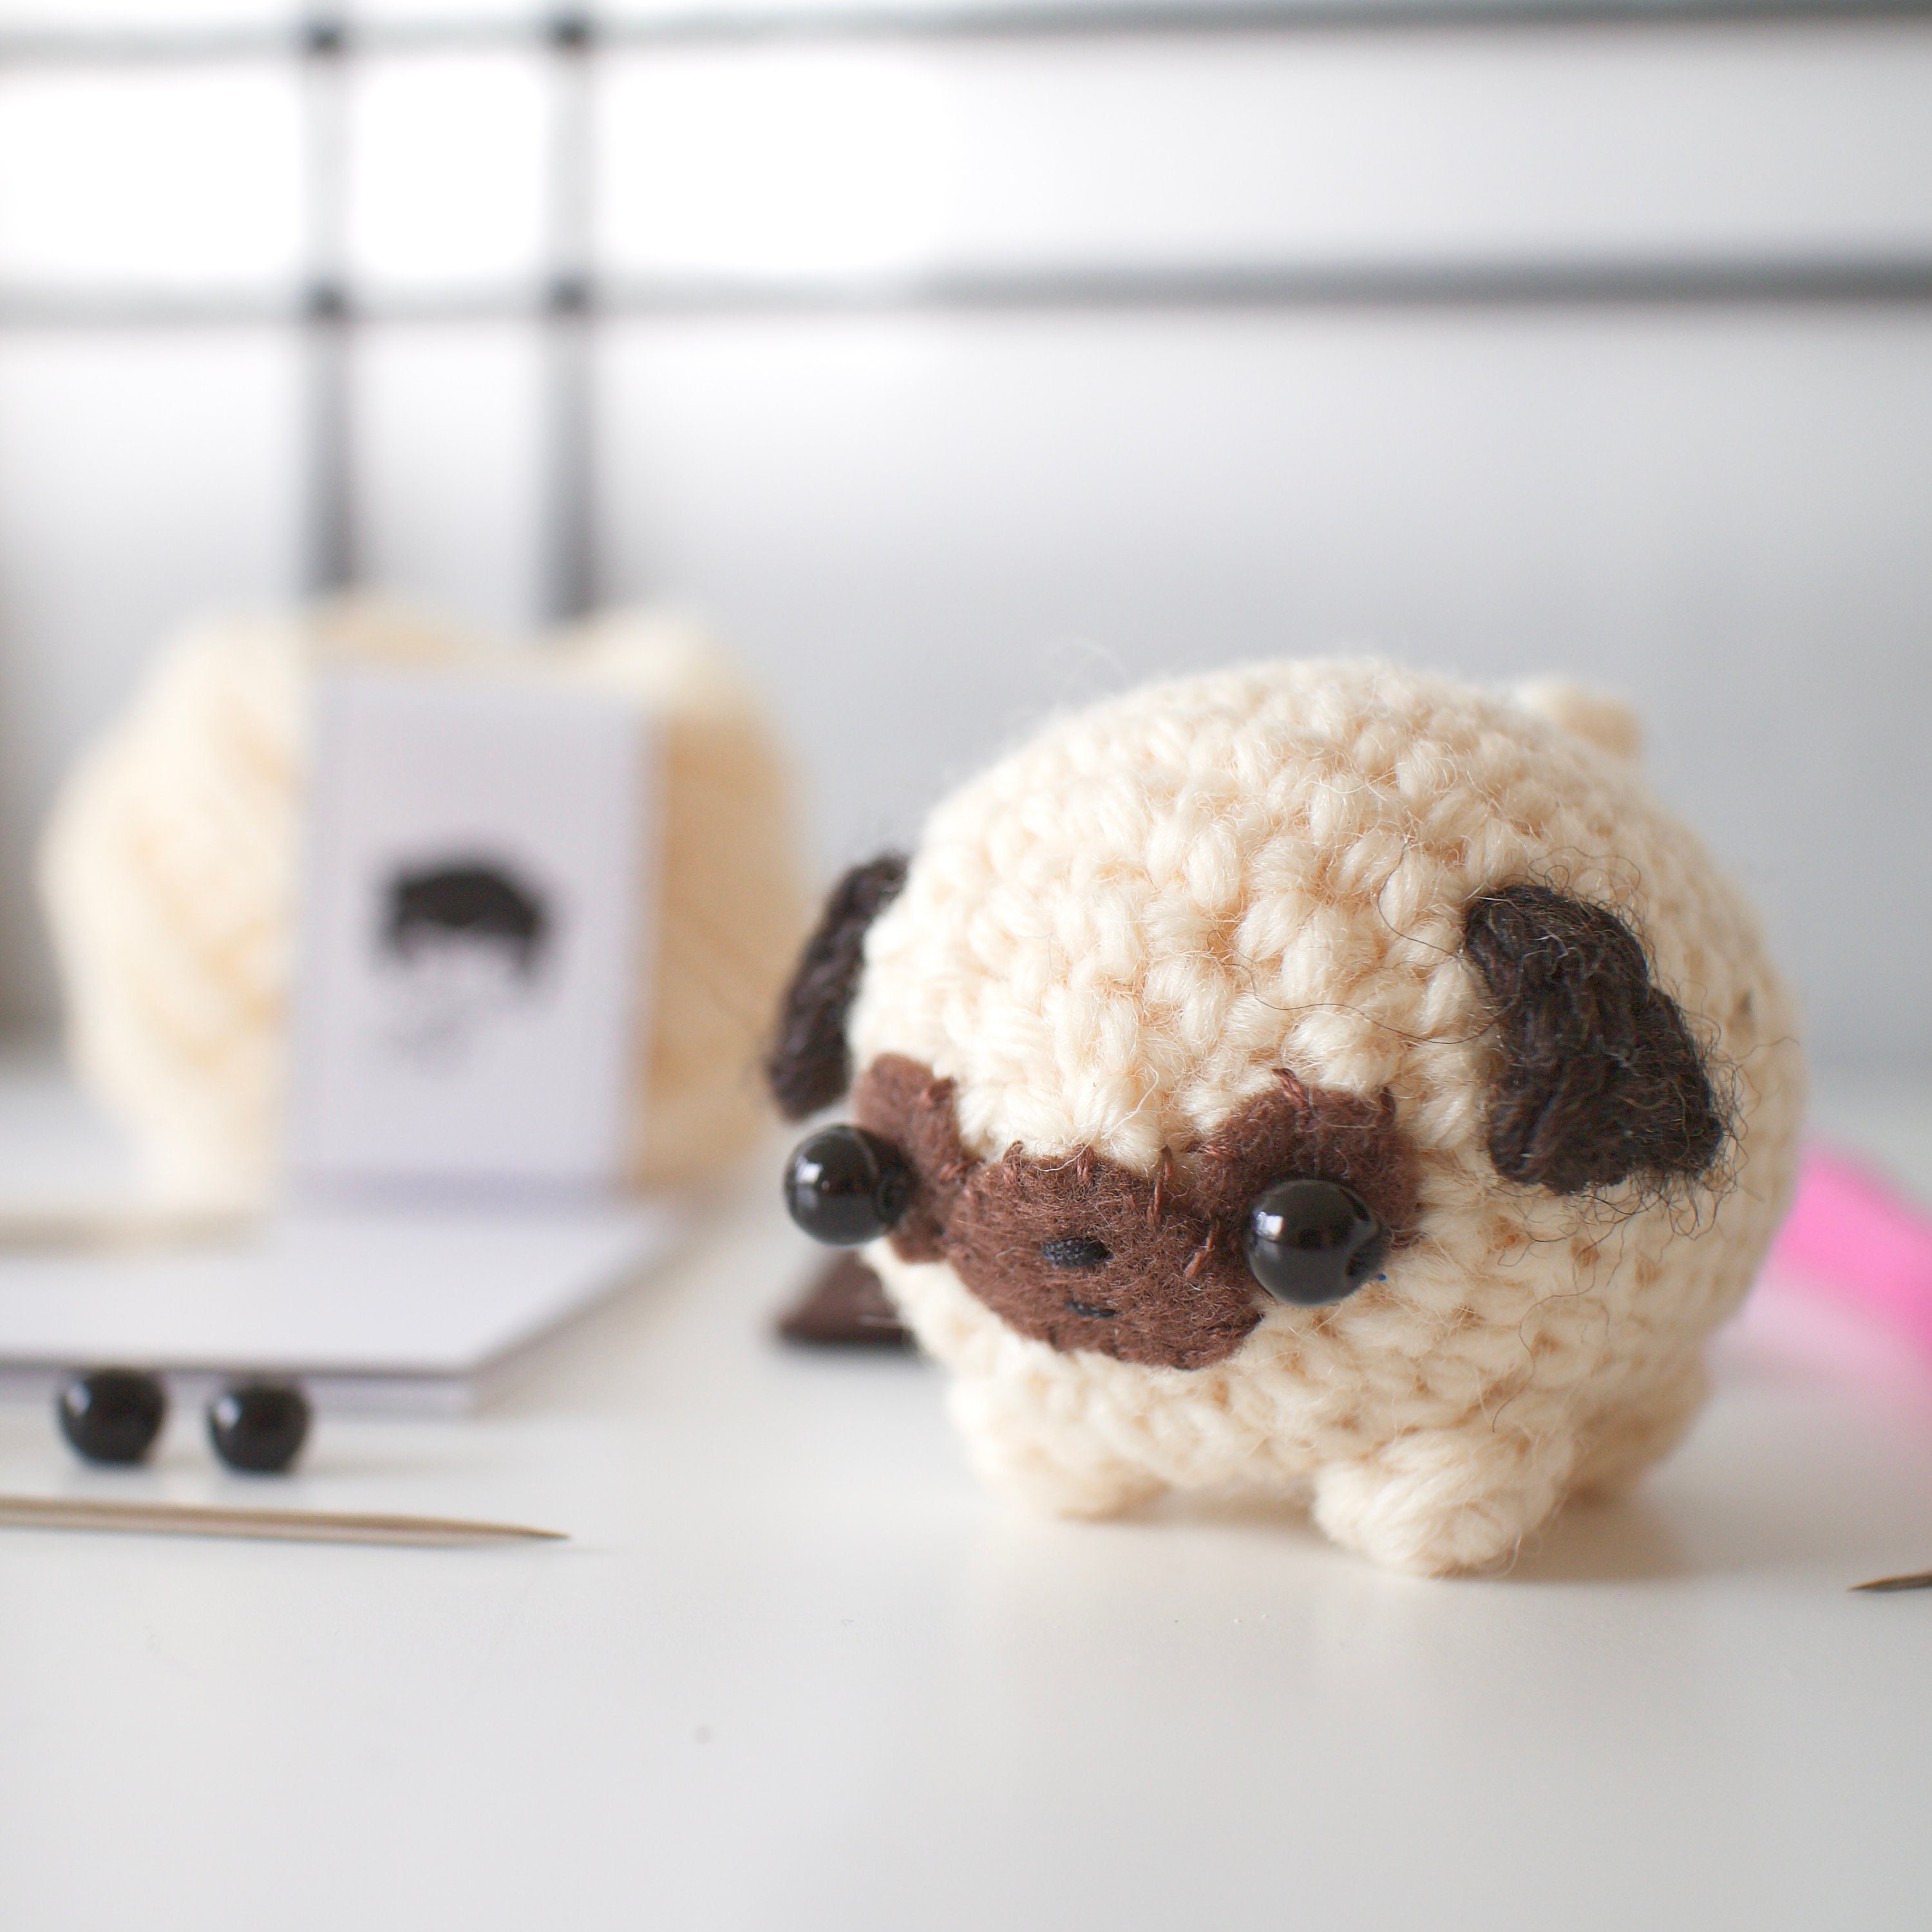 crochet kit - amigurumi pug dog craft kit